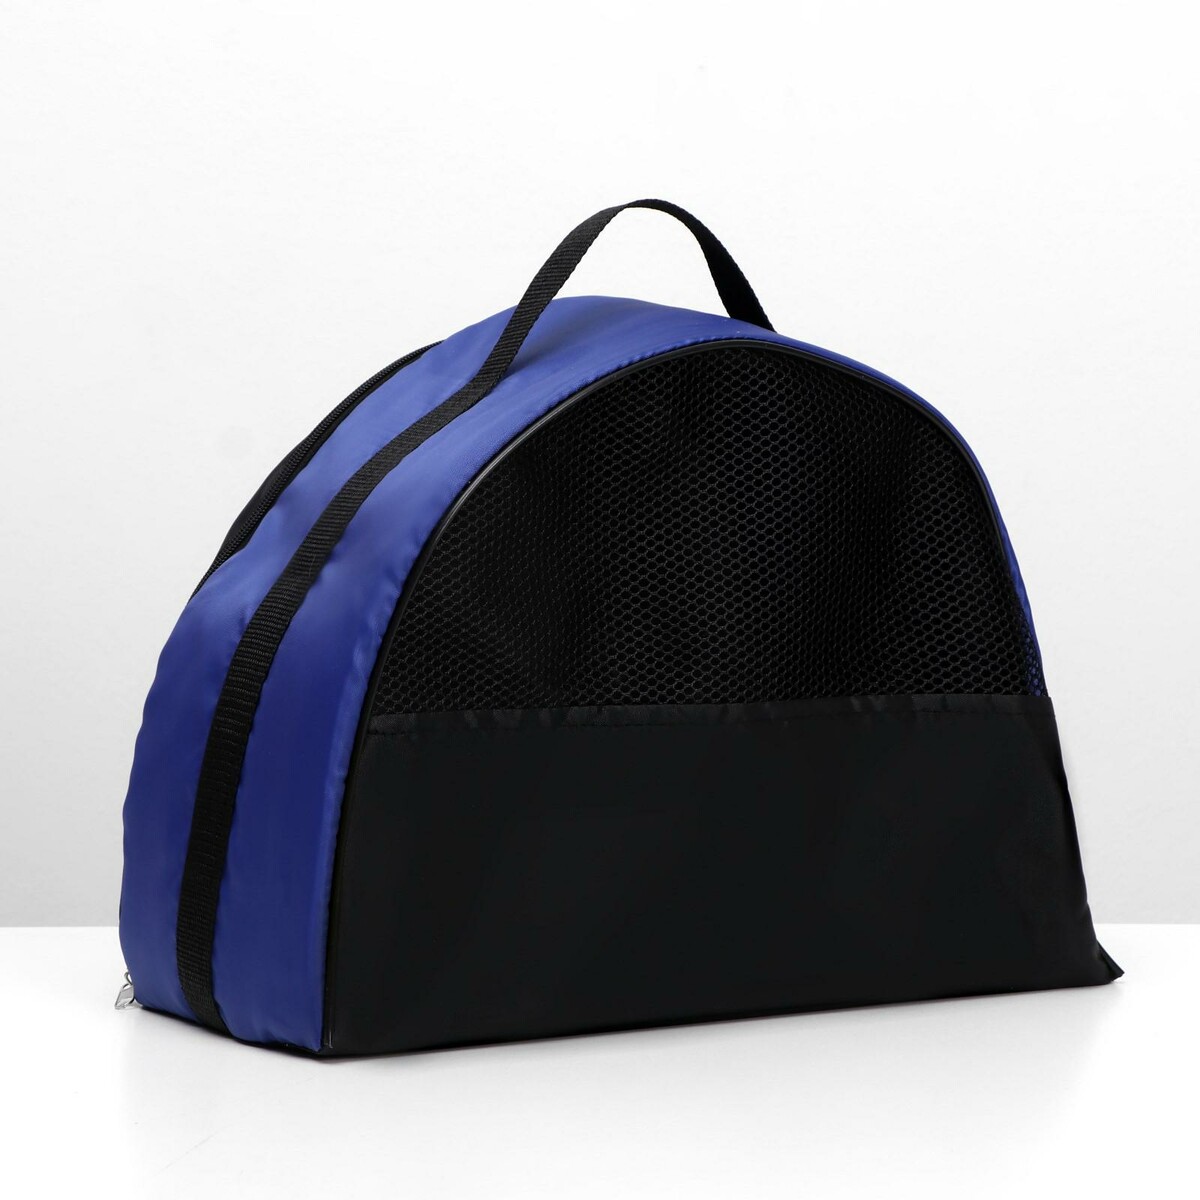 Сумка - переноска для животных, оксфорд, 39 х 19 х 27 см, синяя сумка переноска для животных оксфорд 42 х 22 х 29 см фиолетовая